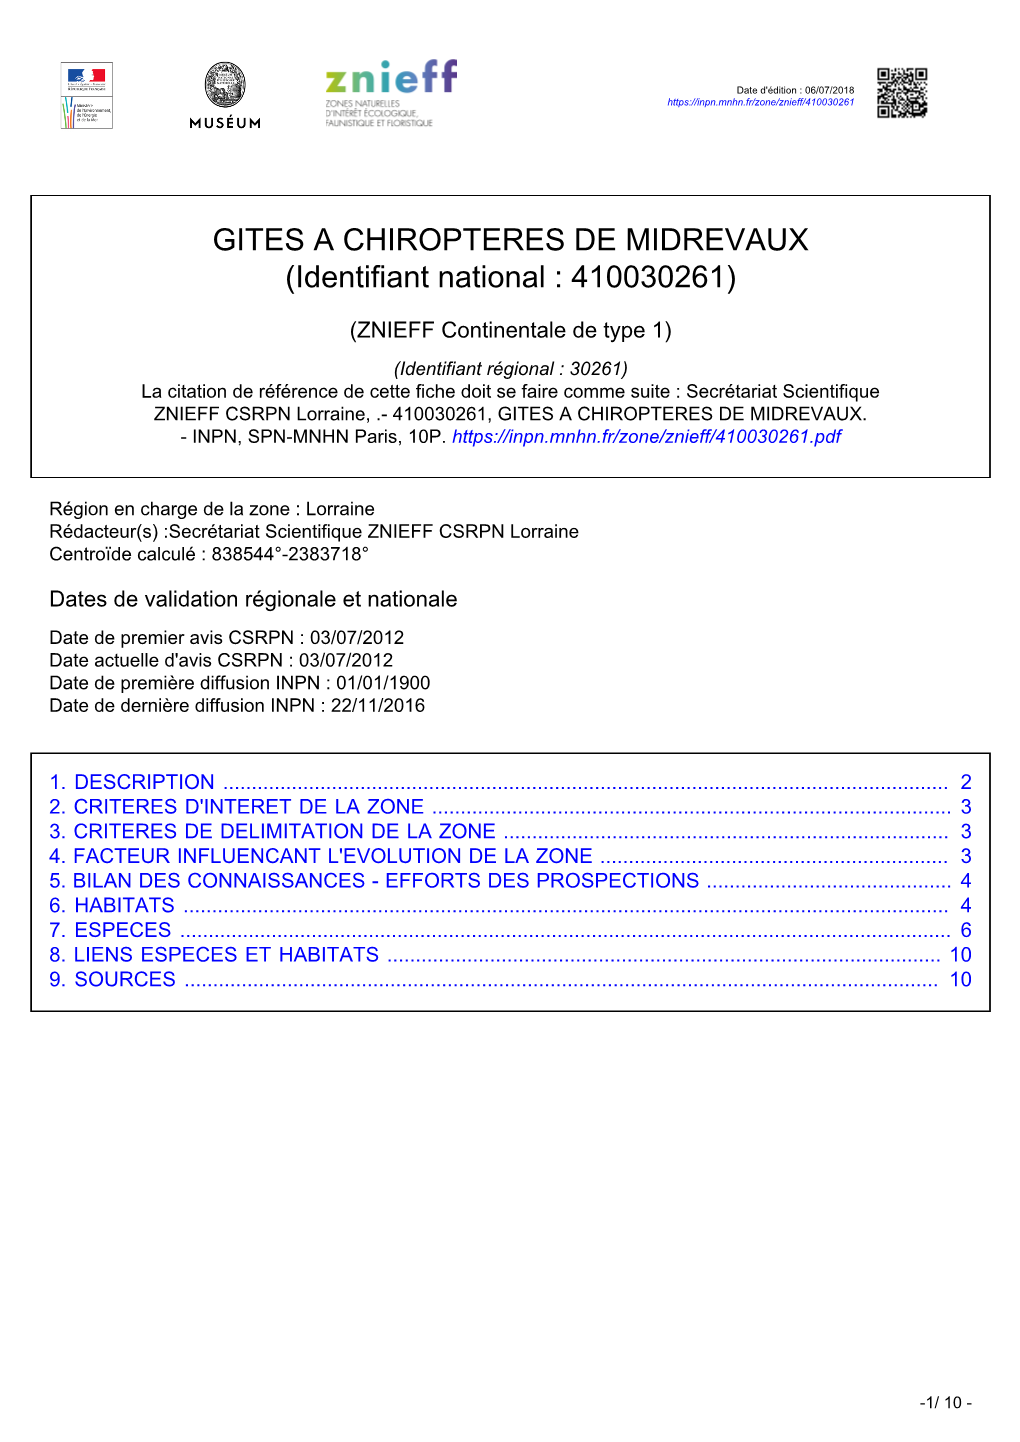 GITES a CHIROPTERES DE MIDREVAUX (Identifiant National : 410030261)